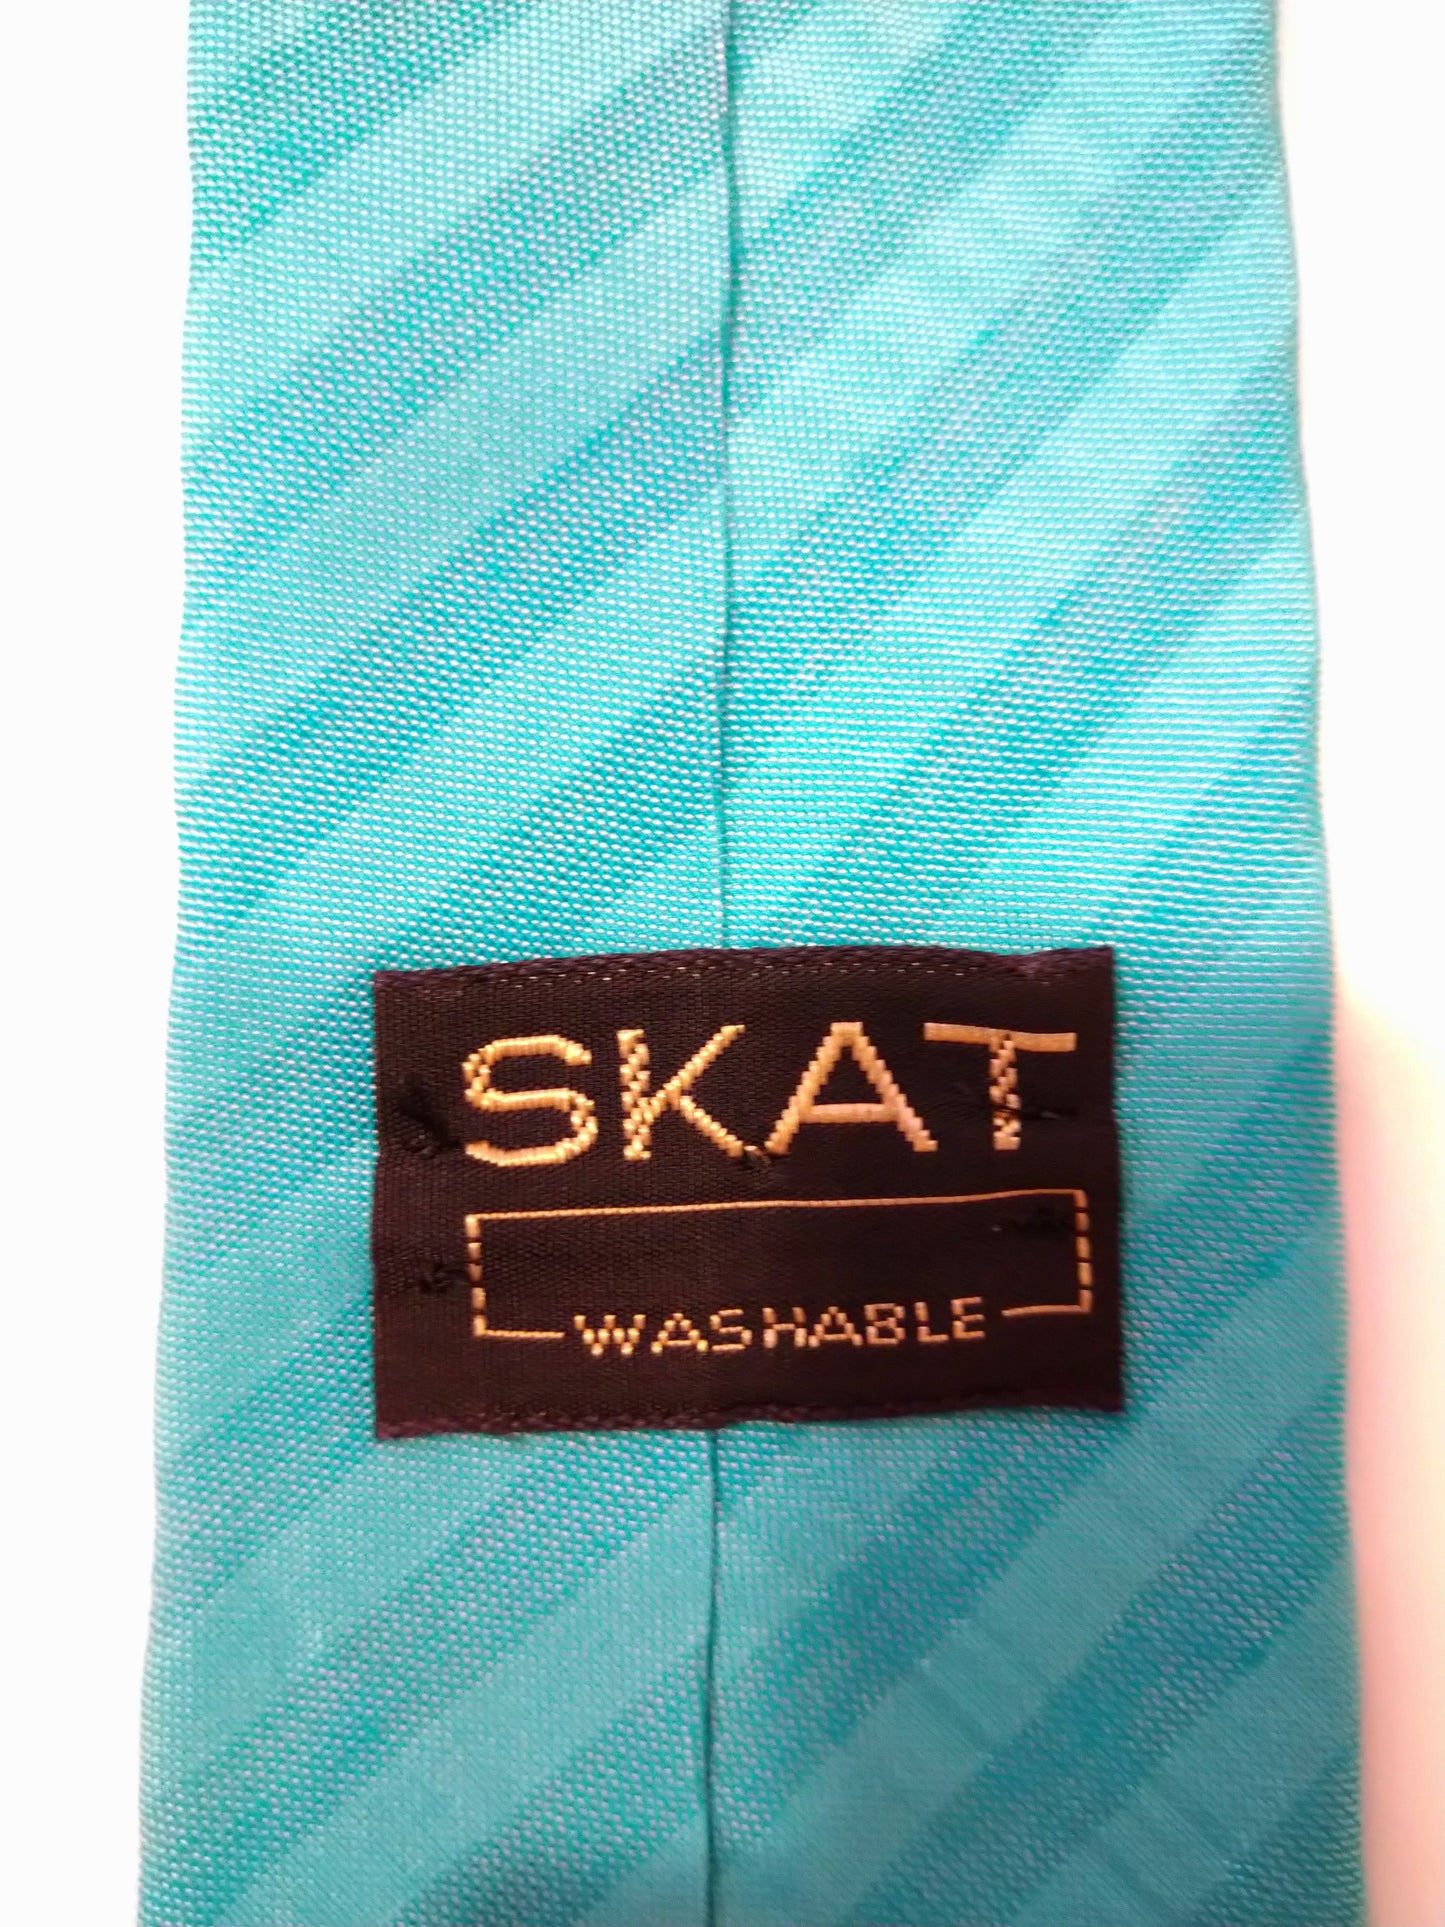 Skate extra schmale Krawatte. Minz -Rippenmotiv.